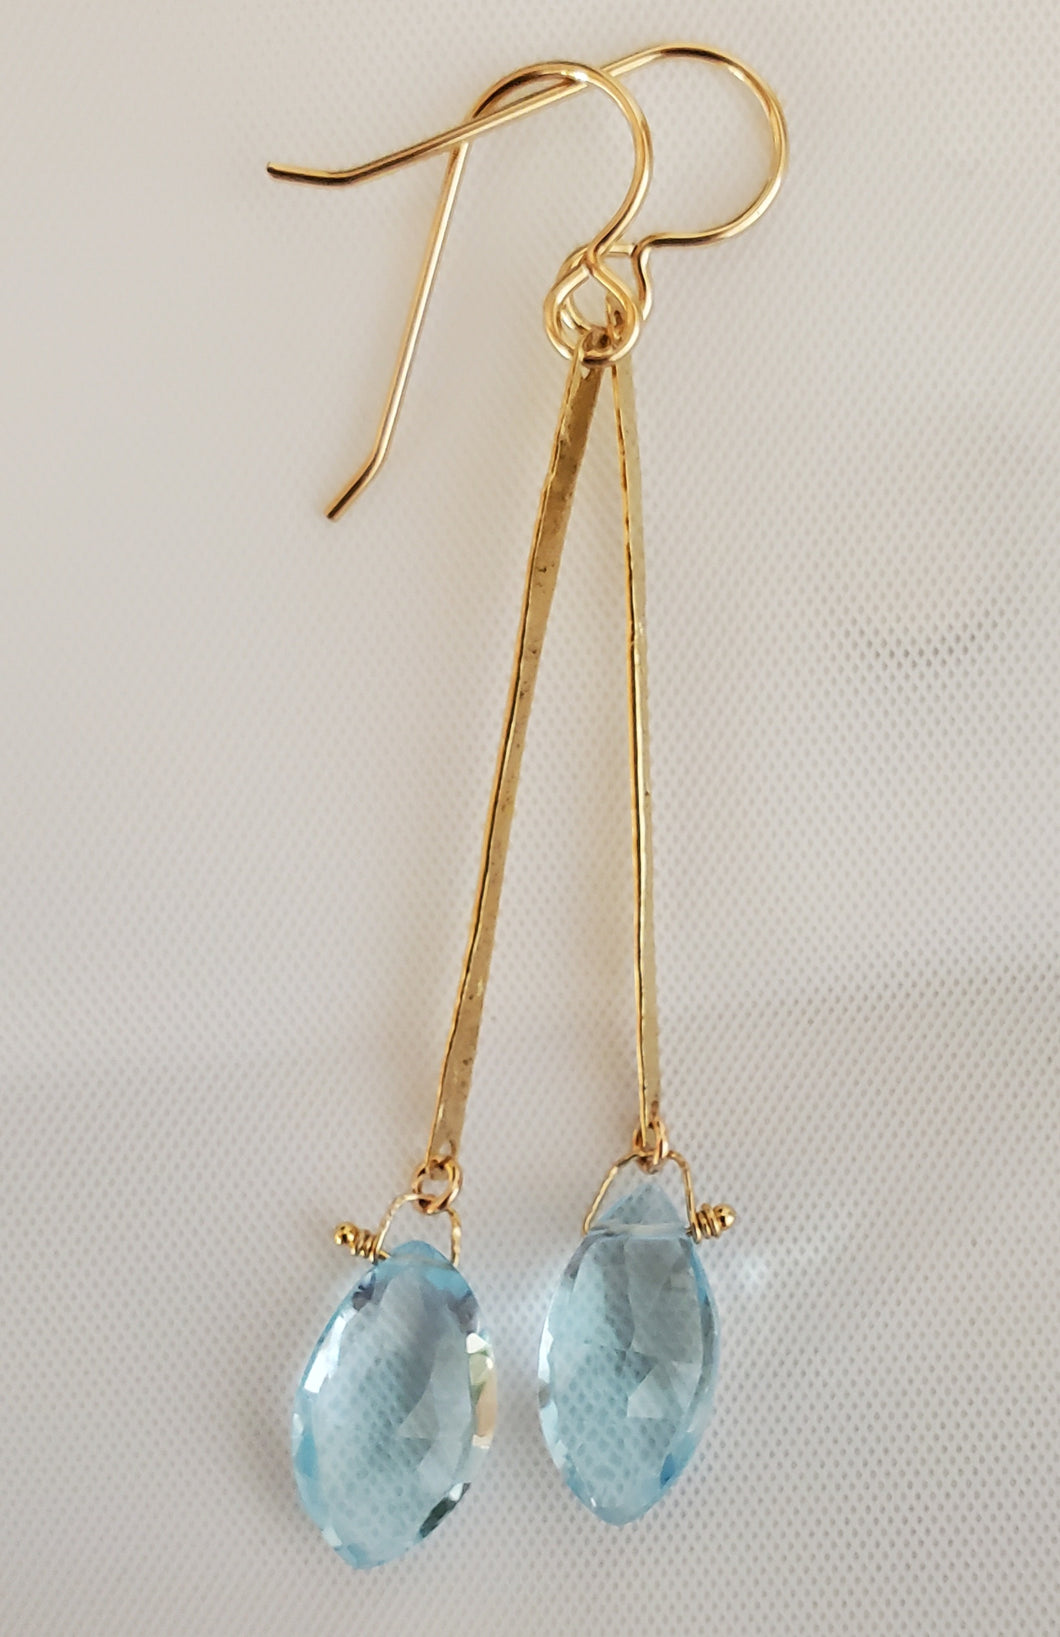 Simon & LuLu gold filled bar earrings with Blue Topaz